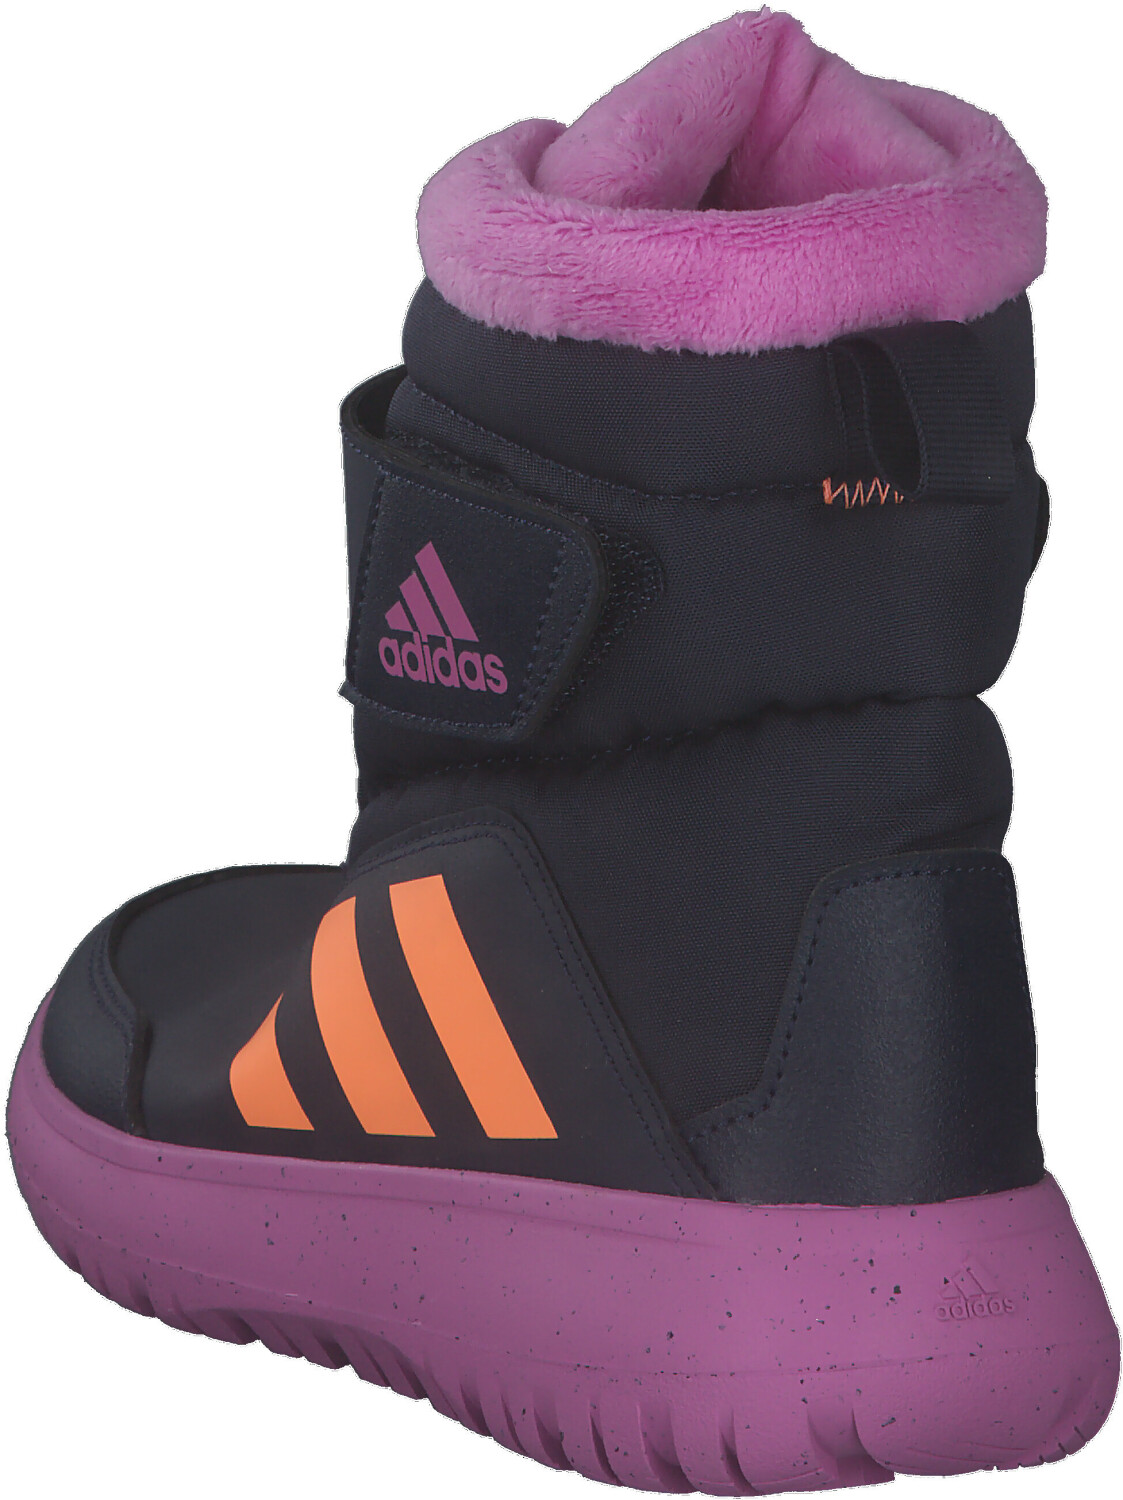 Adidas Winterplay Kids C legend ink/beam orange/pulse lilac ab 42,00 € |  Preisvergleich bei